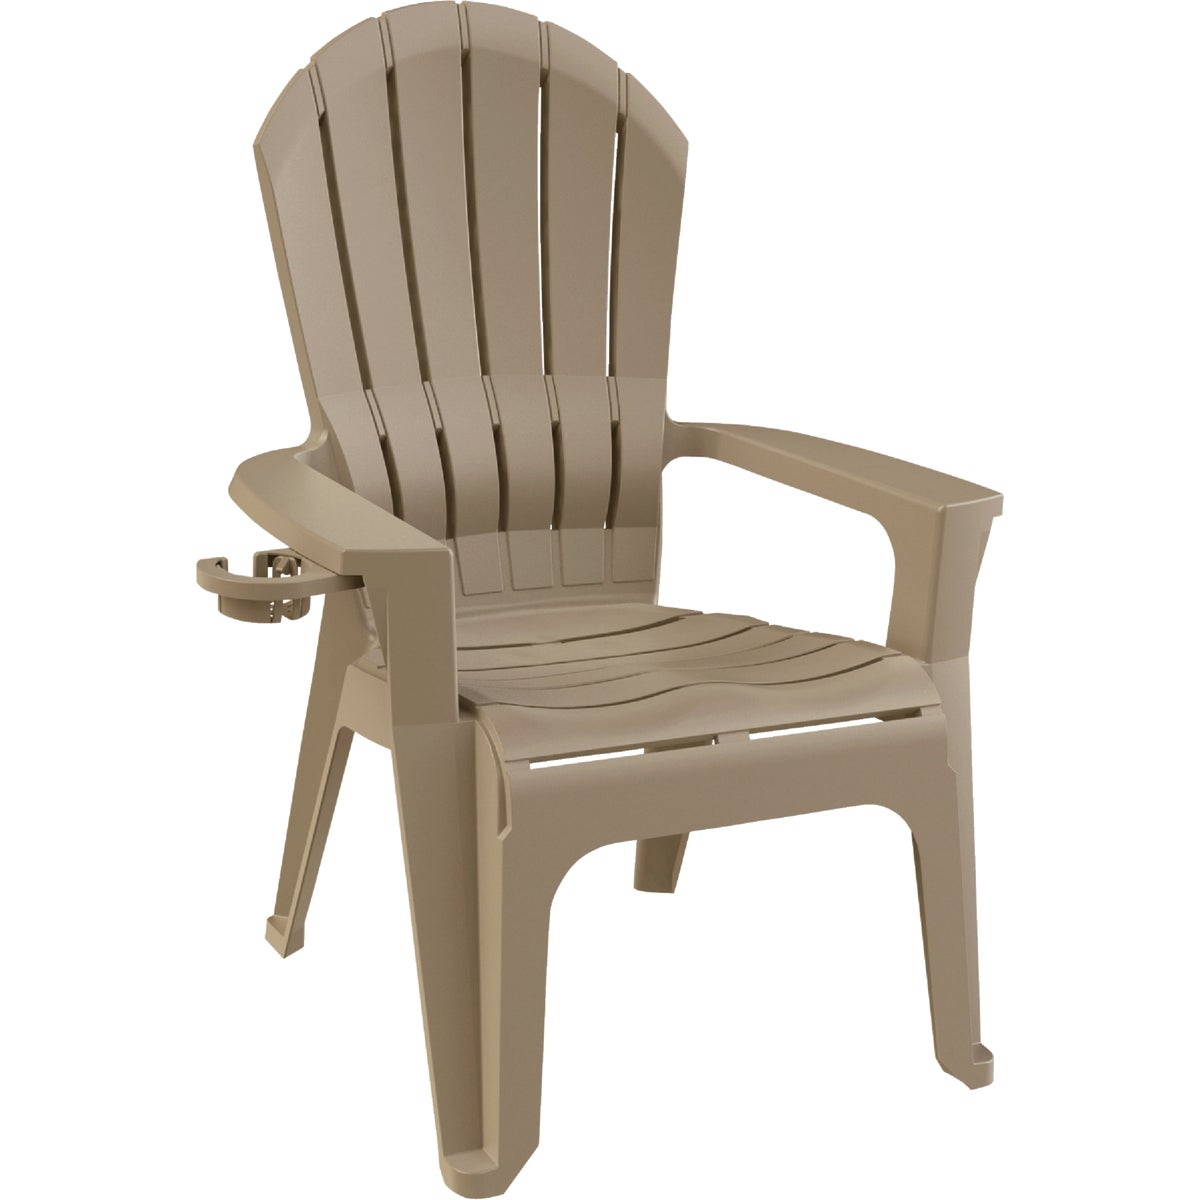 Adams Big Easy Portobello Resin Adirondack Chair